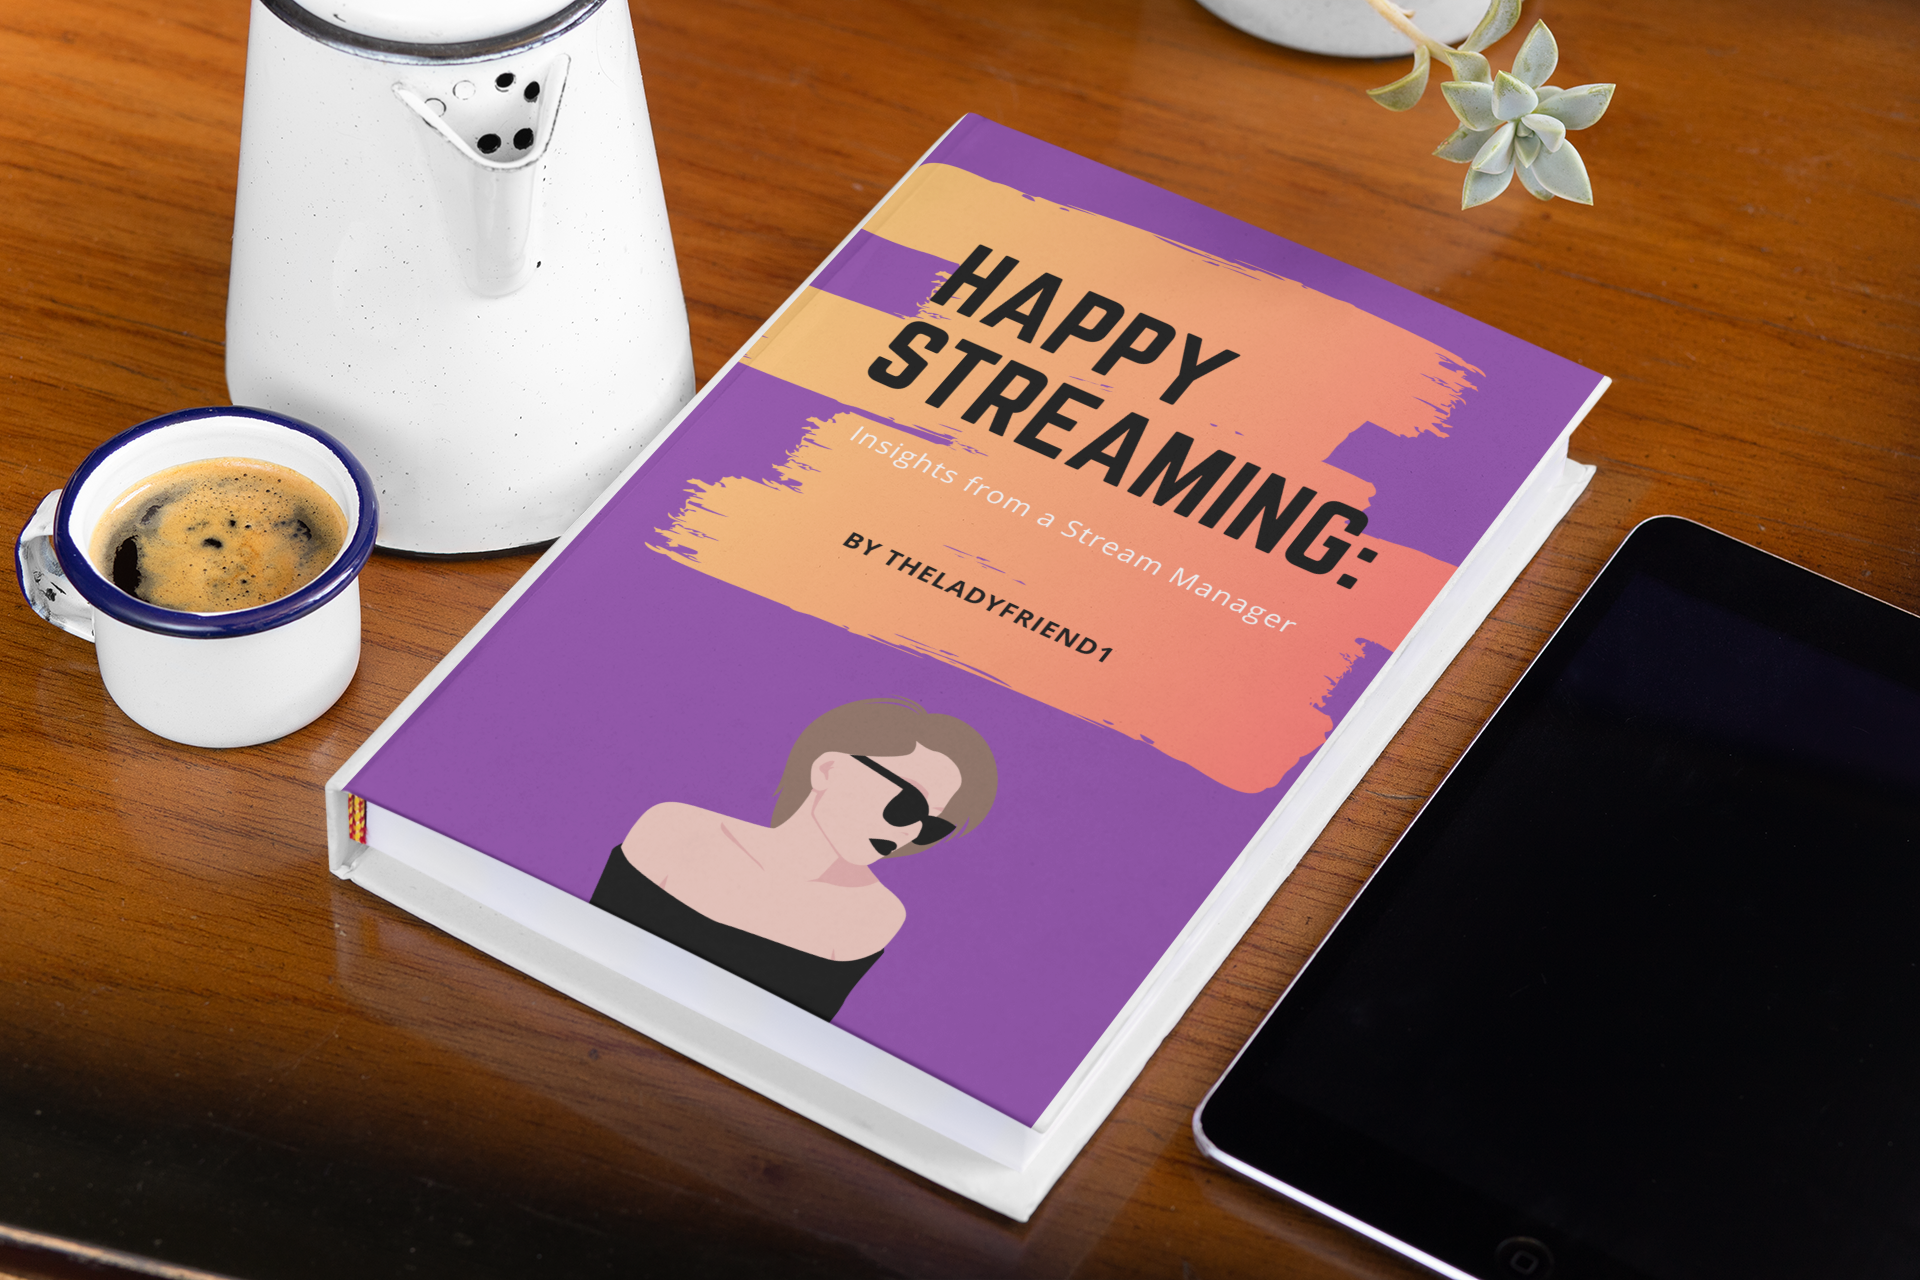 happy streaming - shop